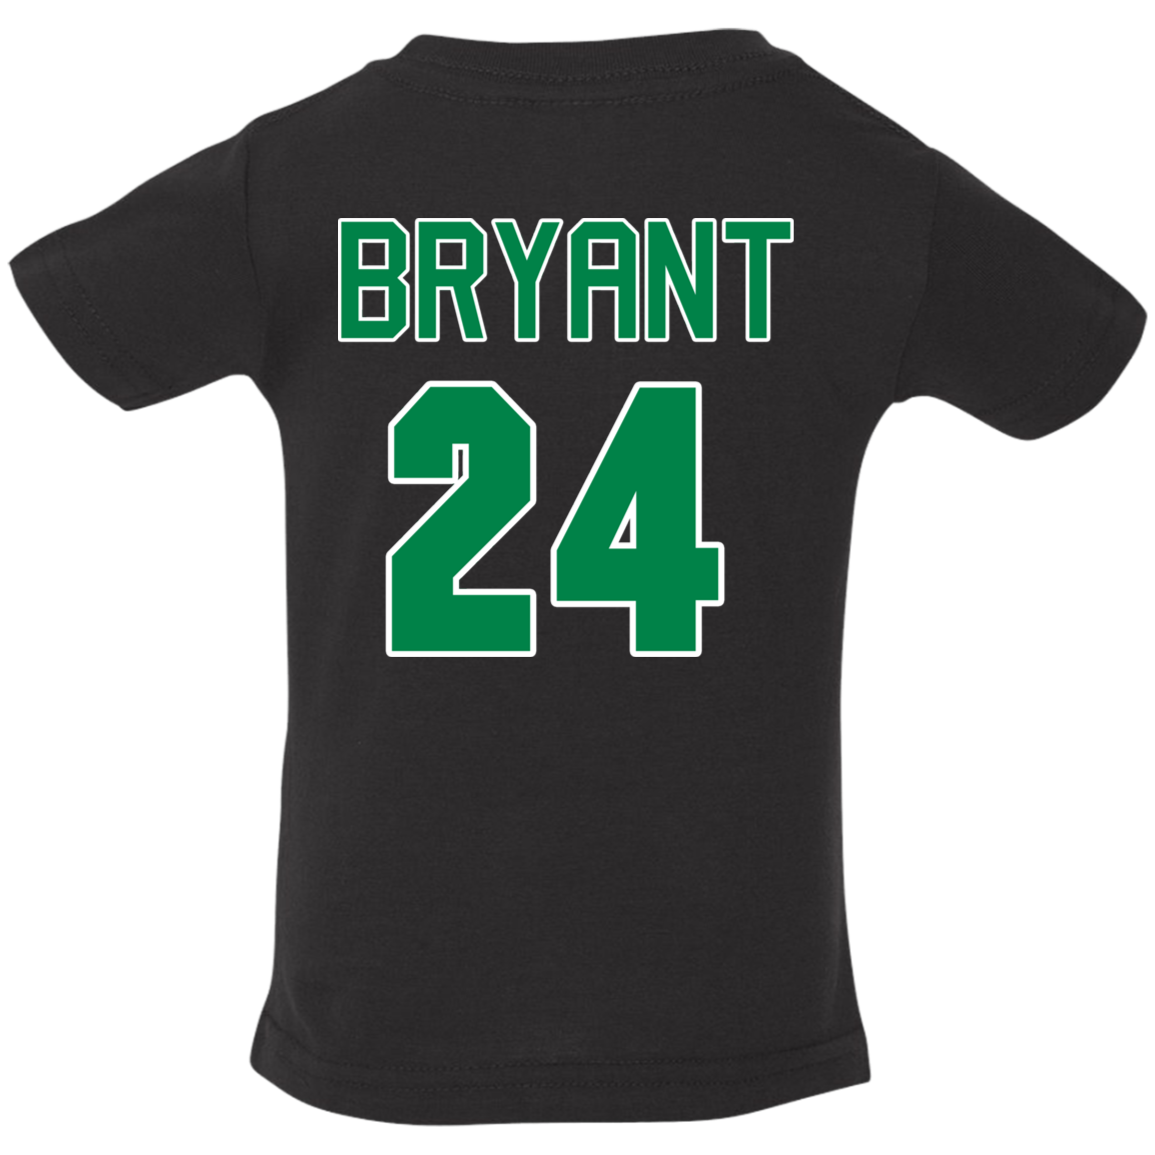 ArtichokeUSA Custom Design. RIP Kobe. Mamba Forever. Celtics / Lakers Fan Art Tribute. Infant Jersey T-Shirt